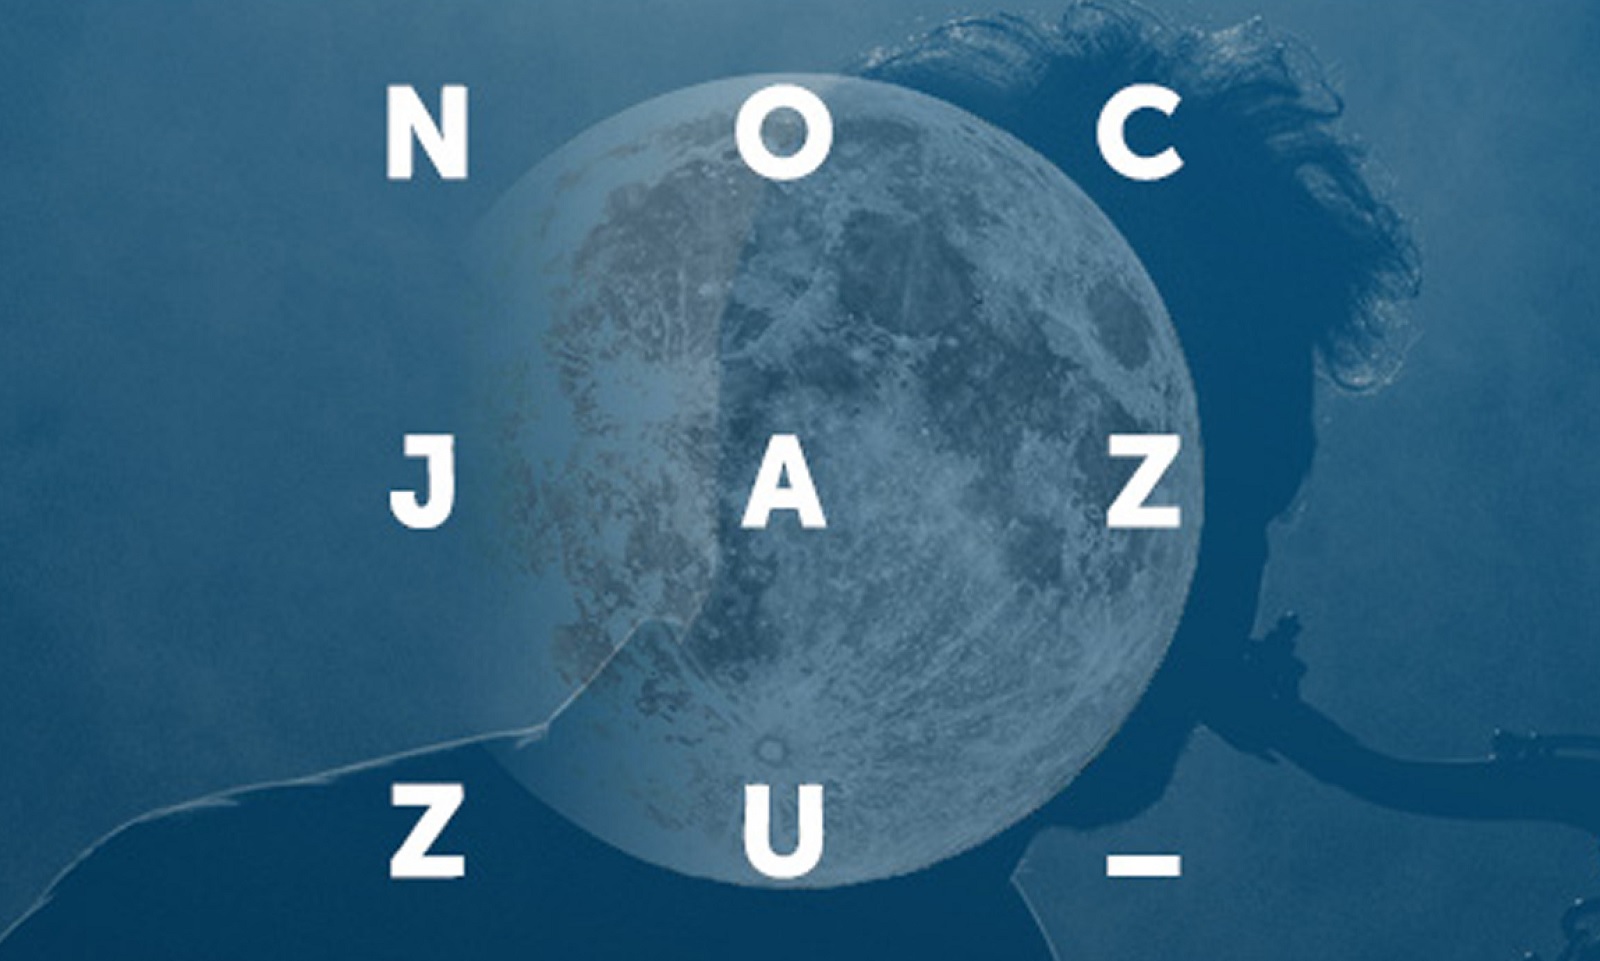 Noc Jazzu 2021